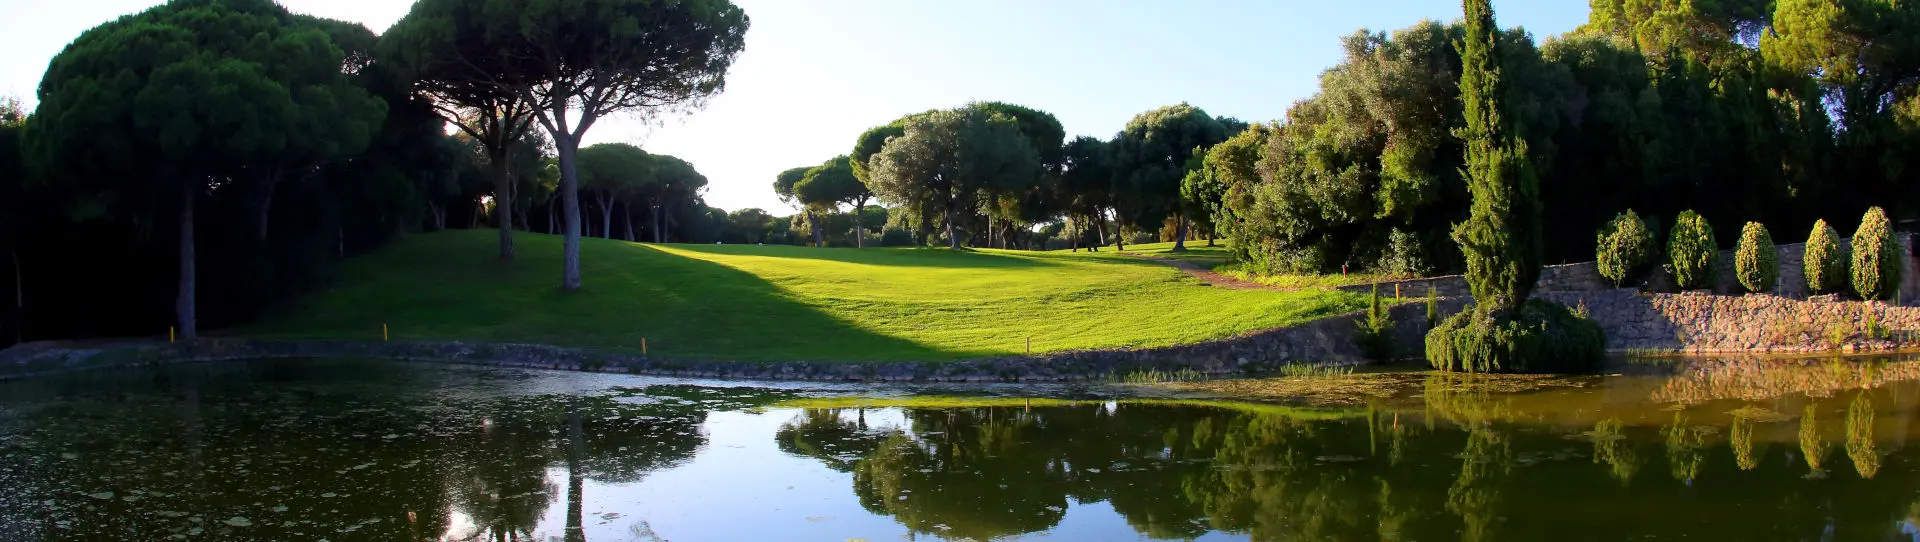 Spain golf courses - Montenmedio - Photo 2